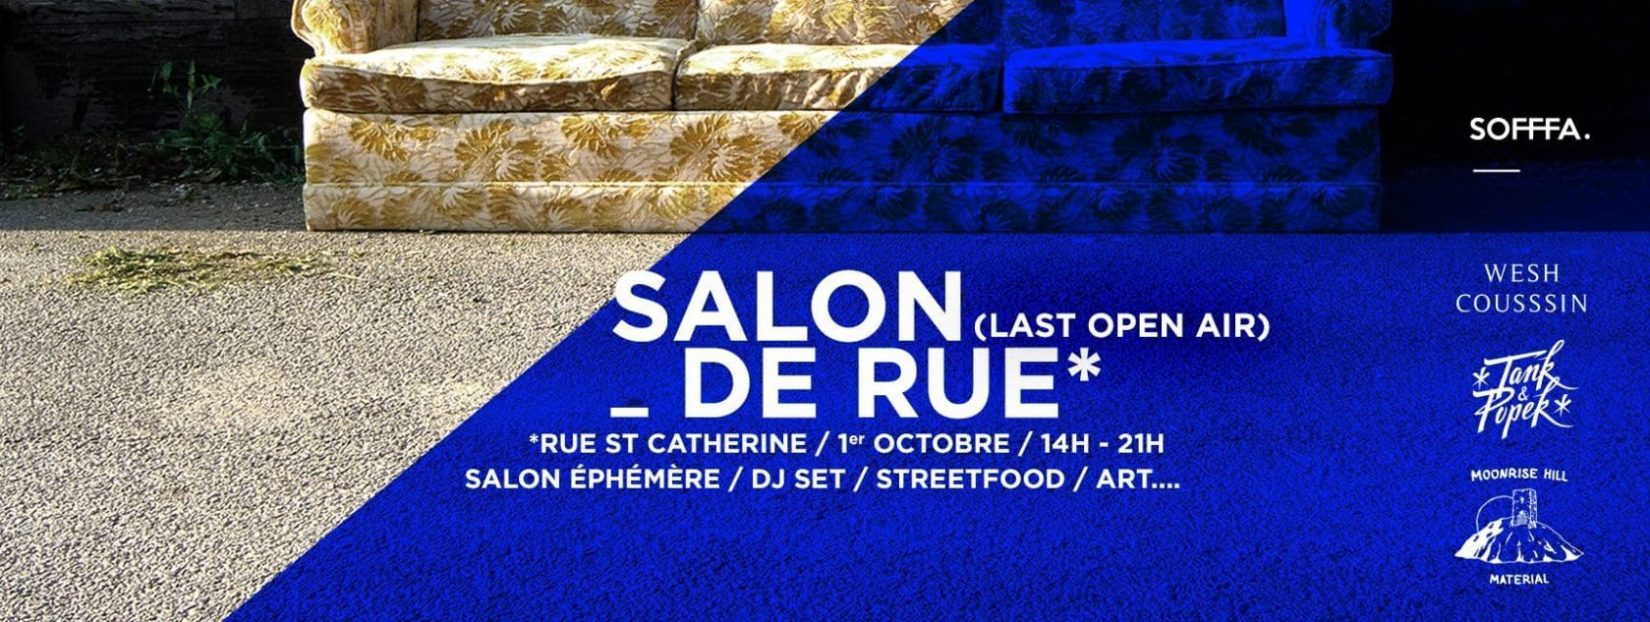 salon-de-rue-last-open-air